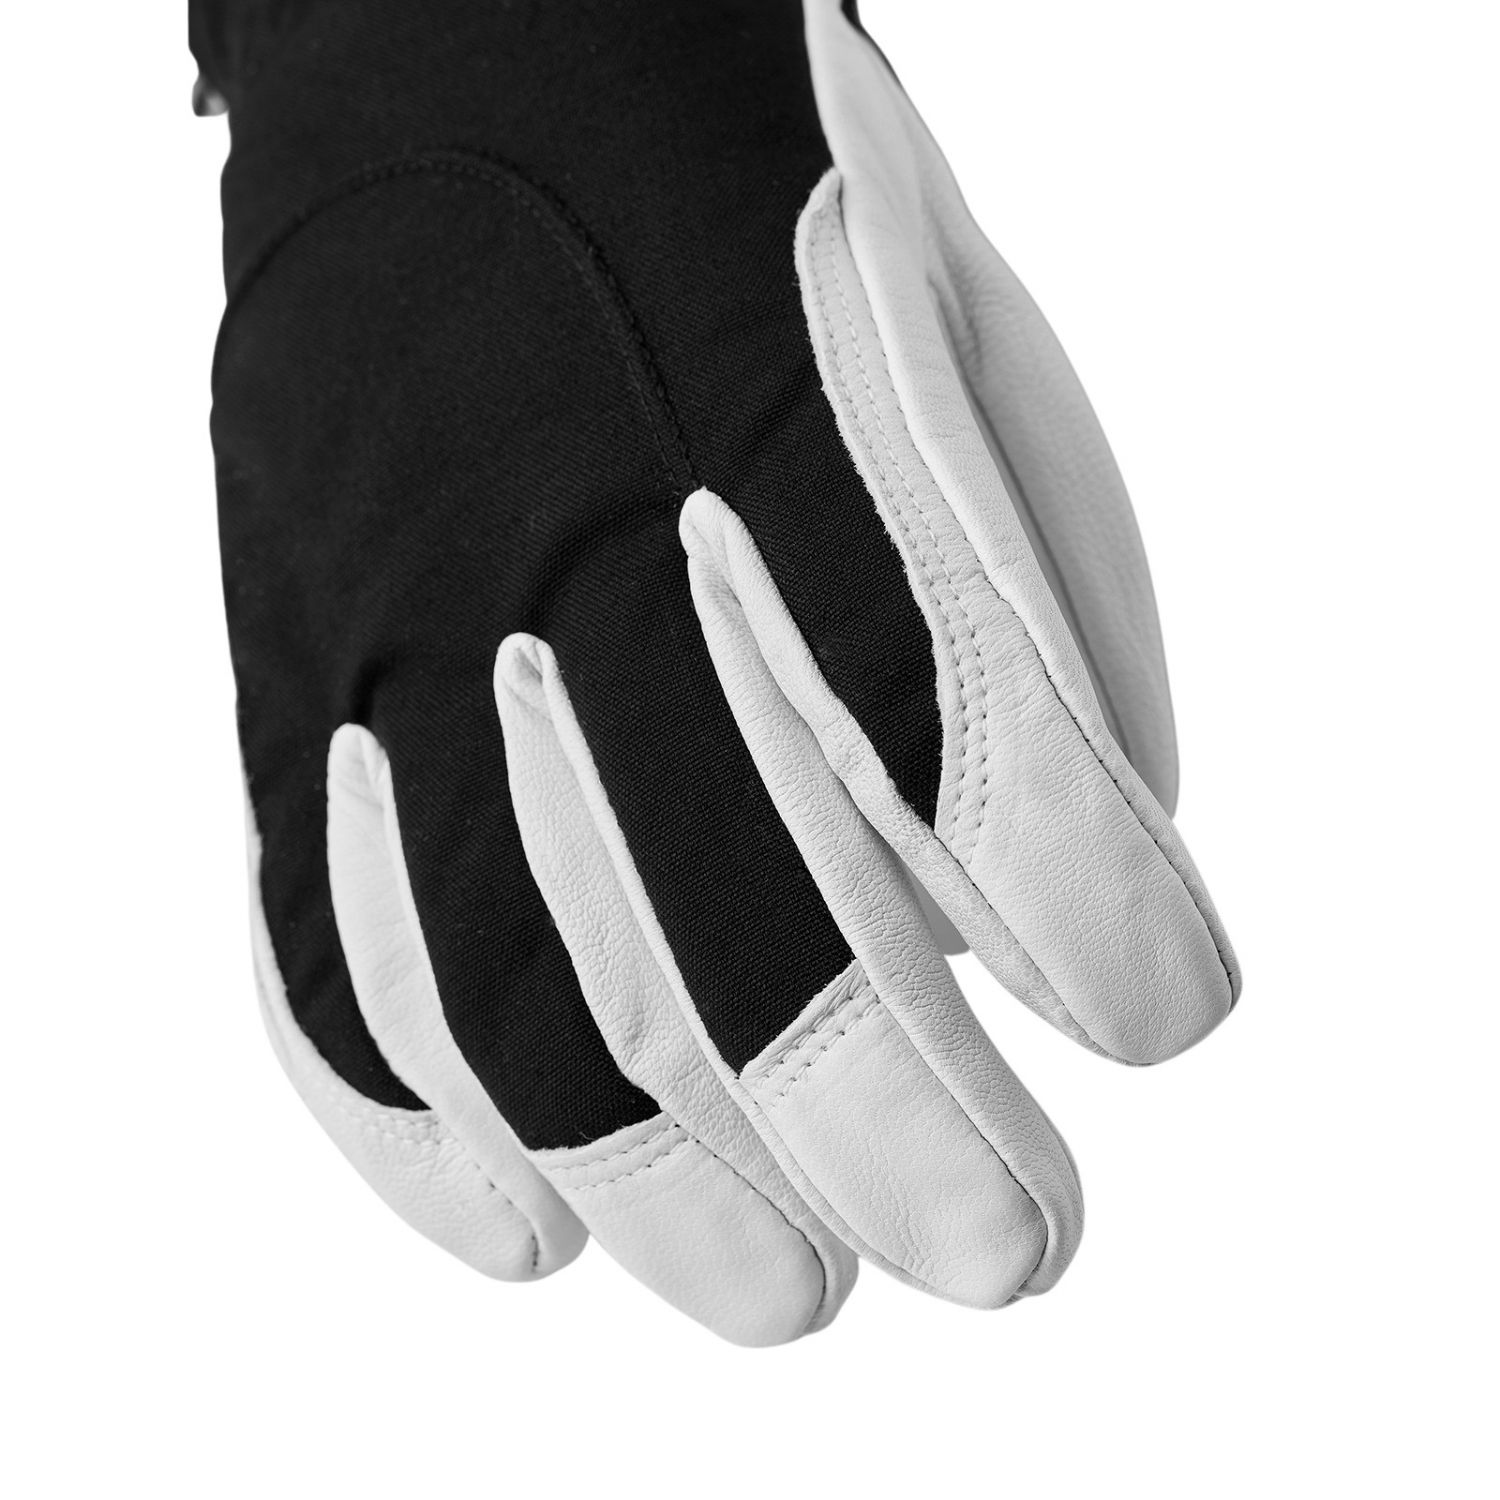 Hestra Heli Ski ski gloves, women, black